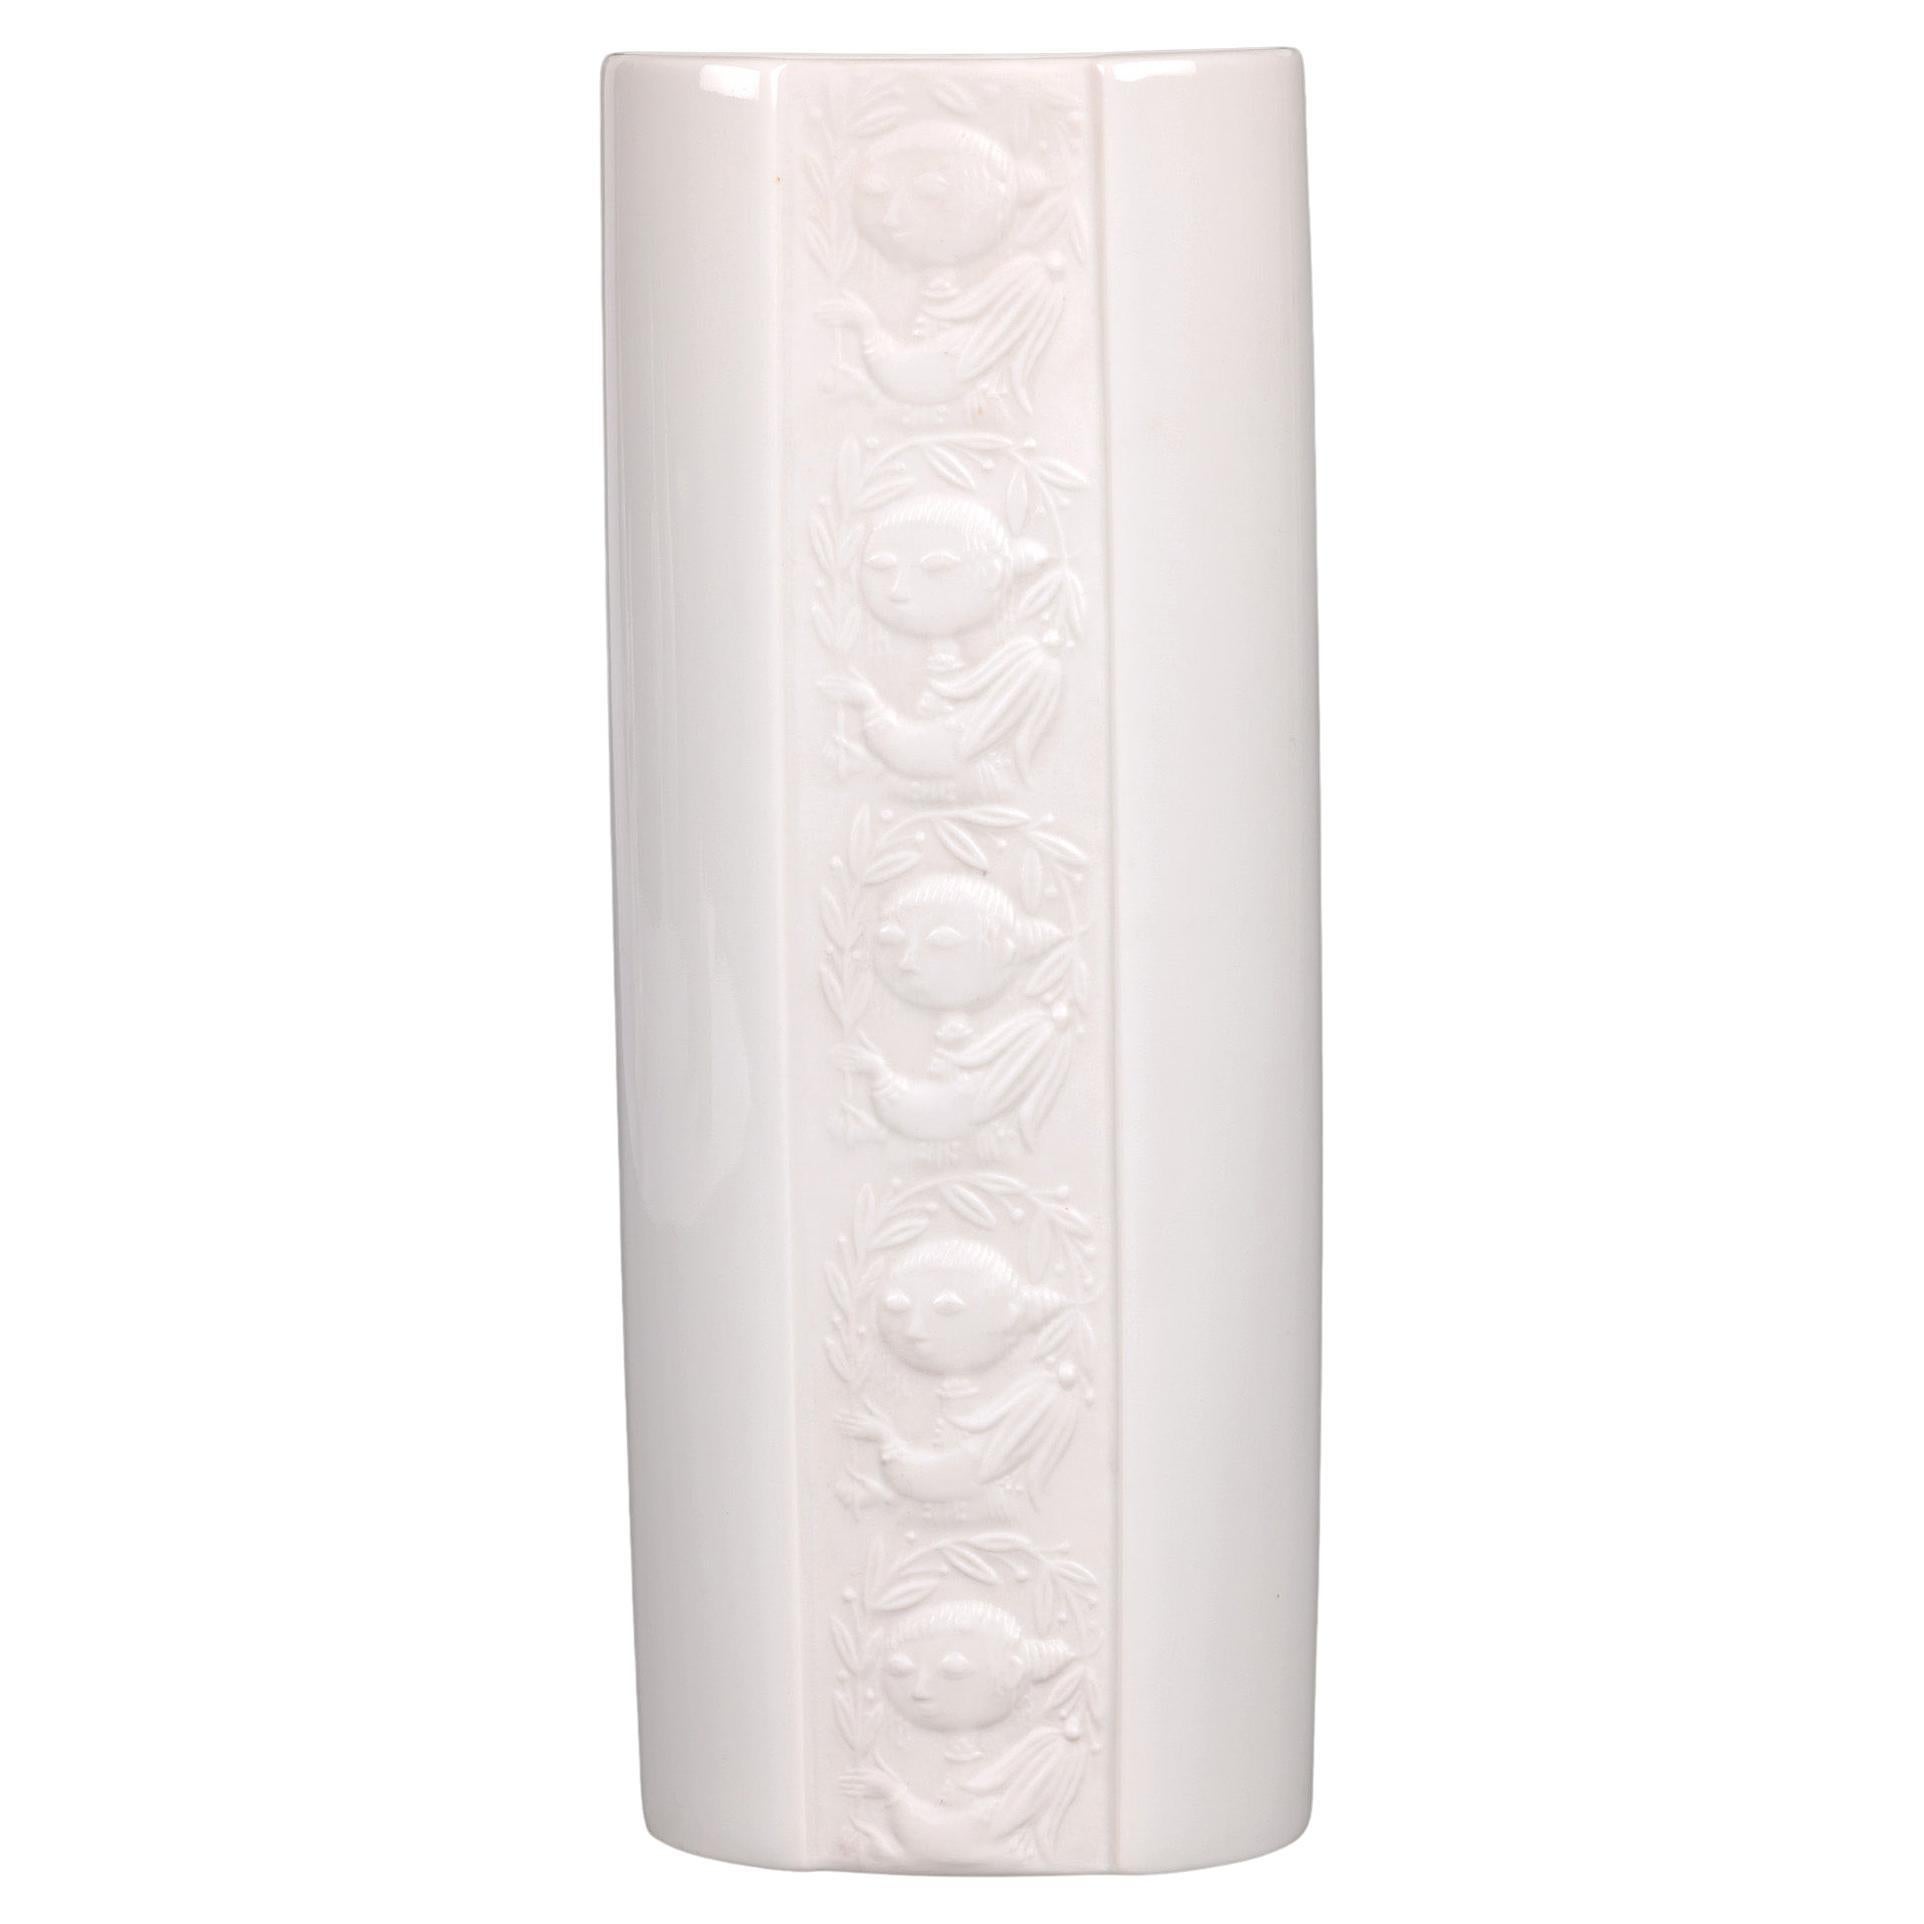 Bjorn Wiinblad for Rosenthal Studio-Linie White Porcelain Vase For Sale